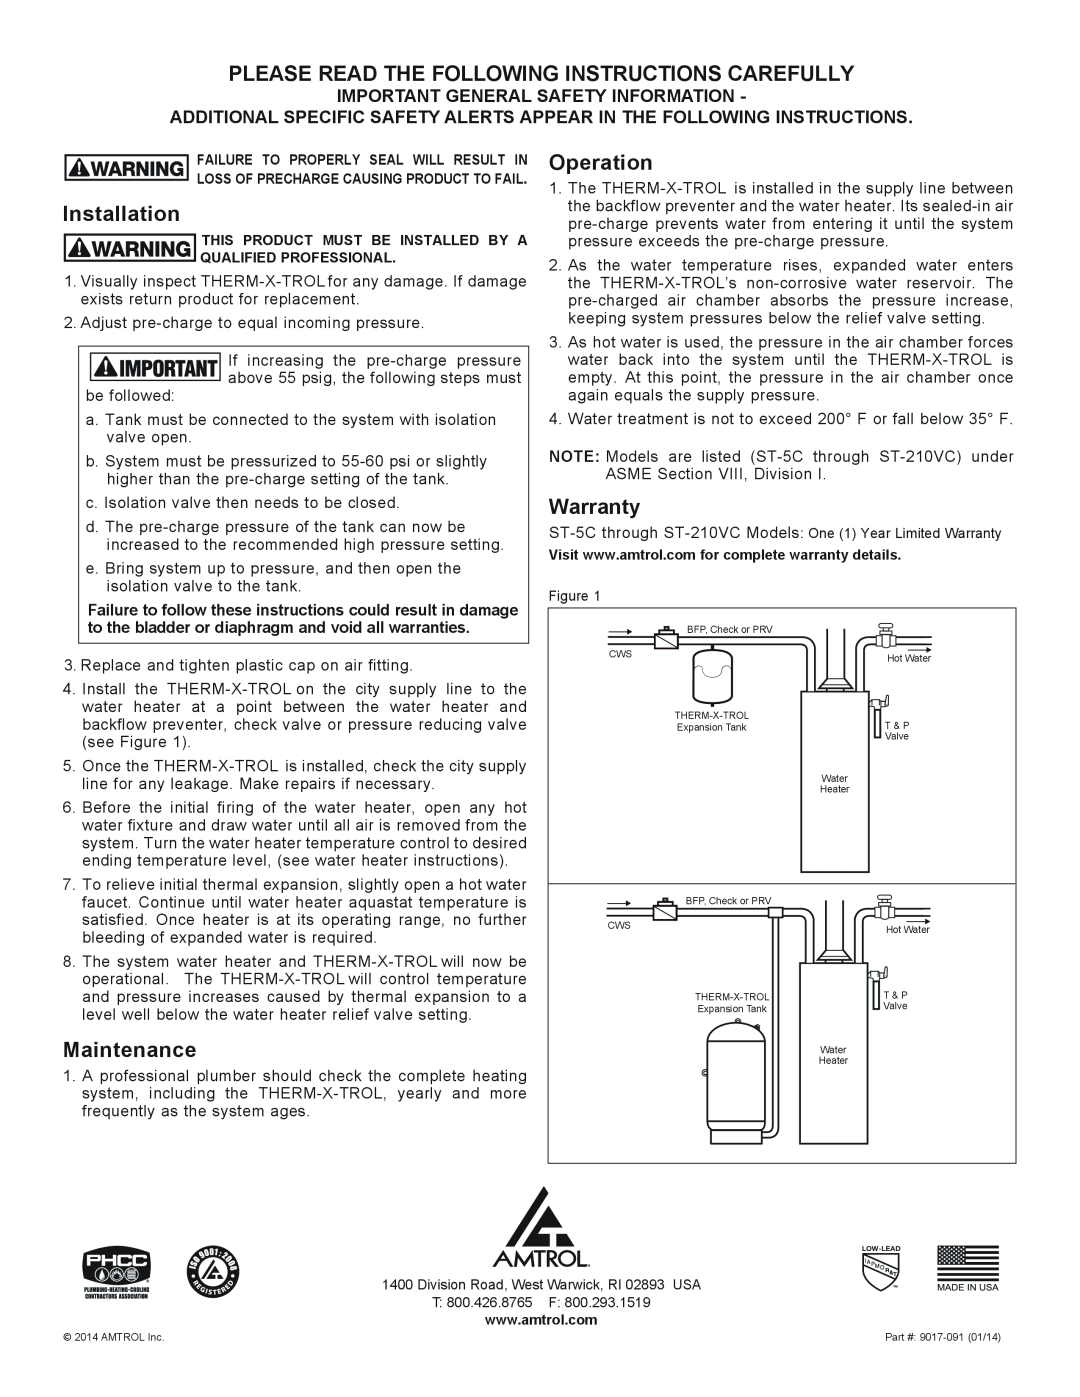 Amtrol ST-5C THROUGH ST-201VC warranty Please Read The Following Instructions Carefully, Installation, Operation, Warranty 